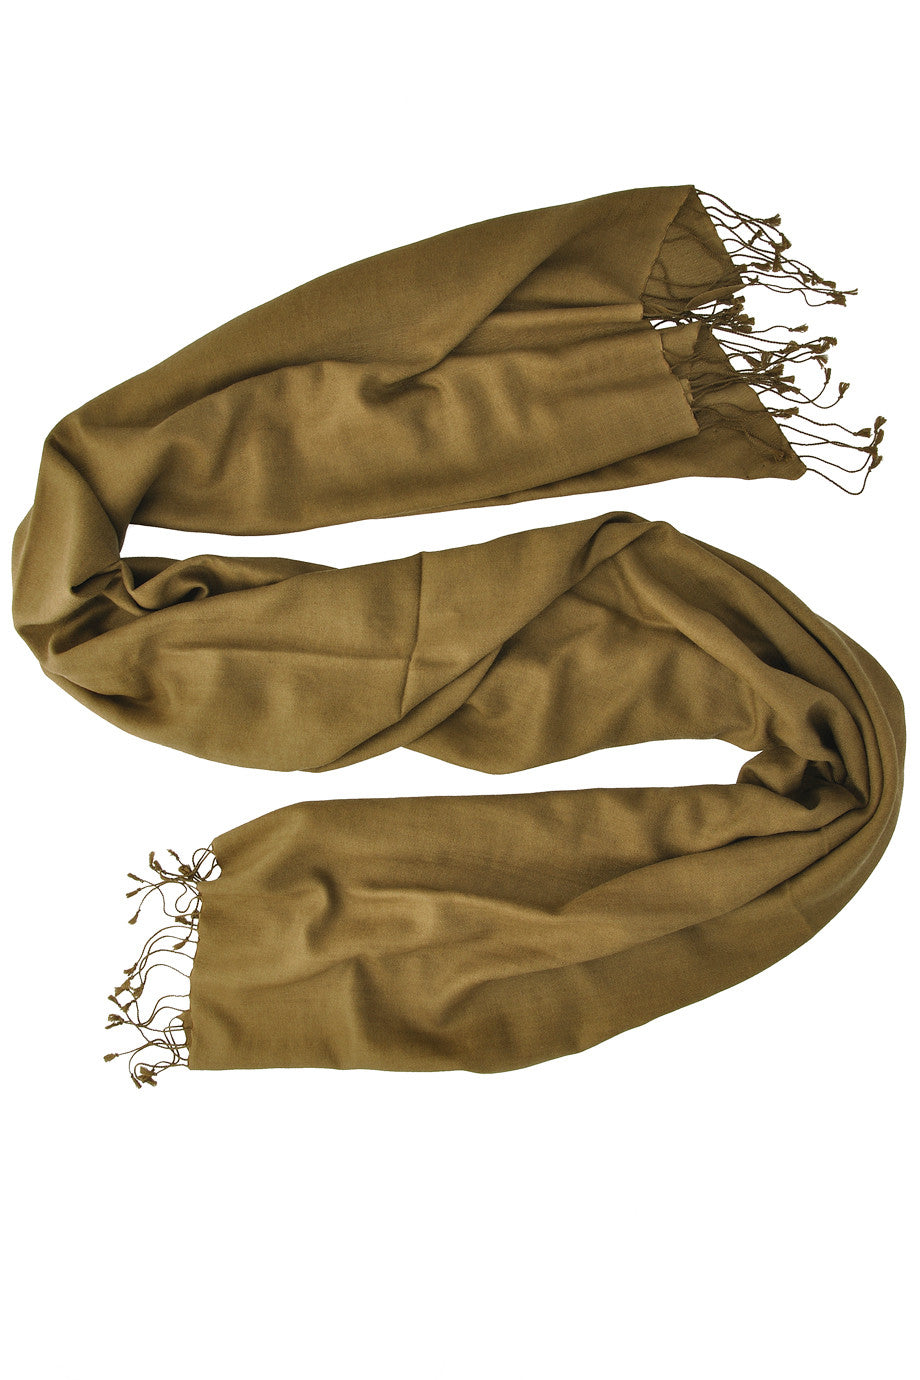 SHERPA Cashmere scarf